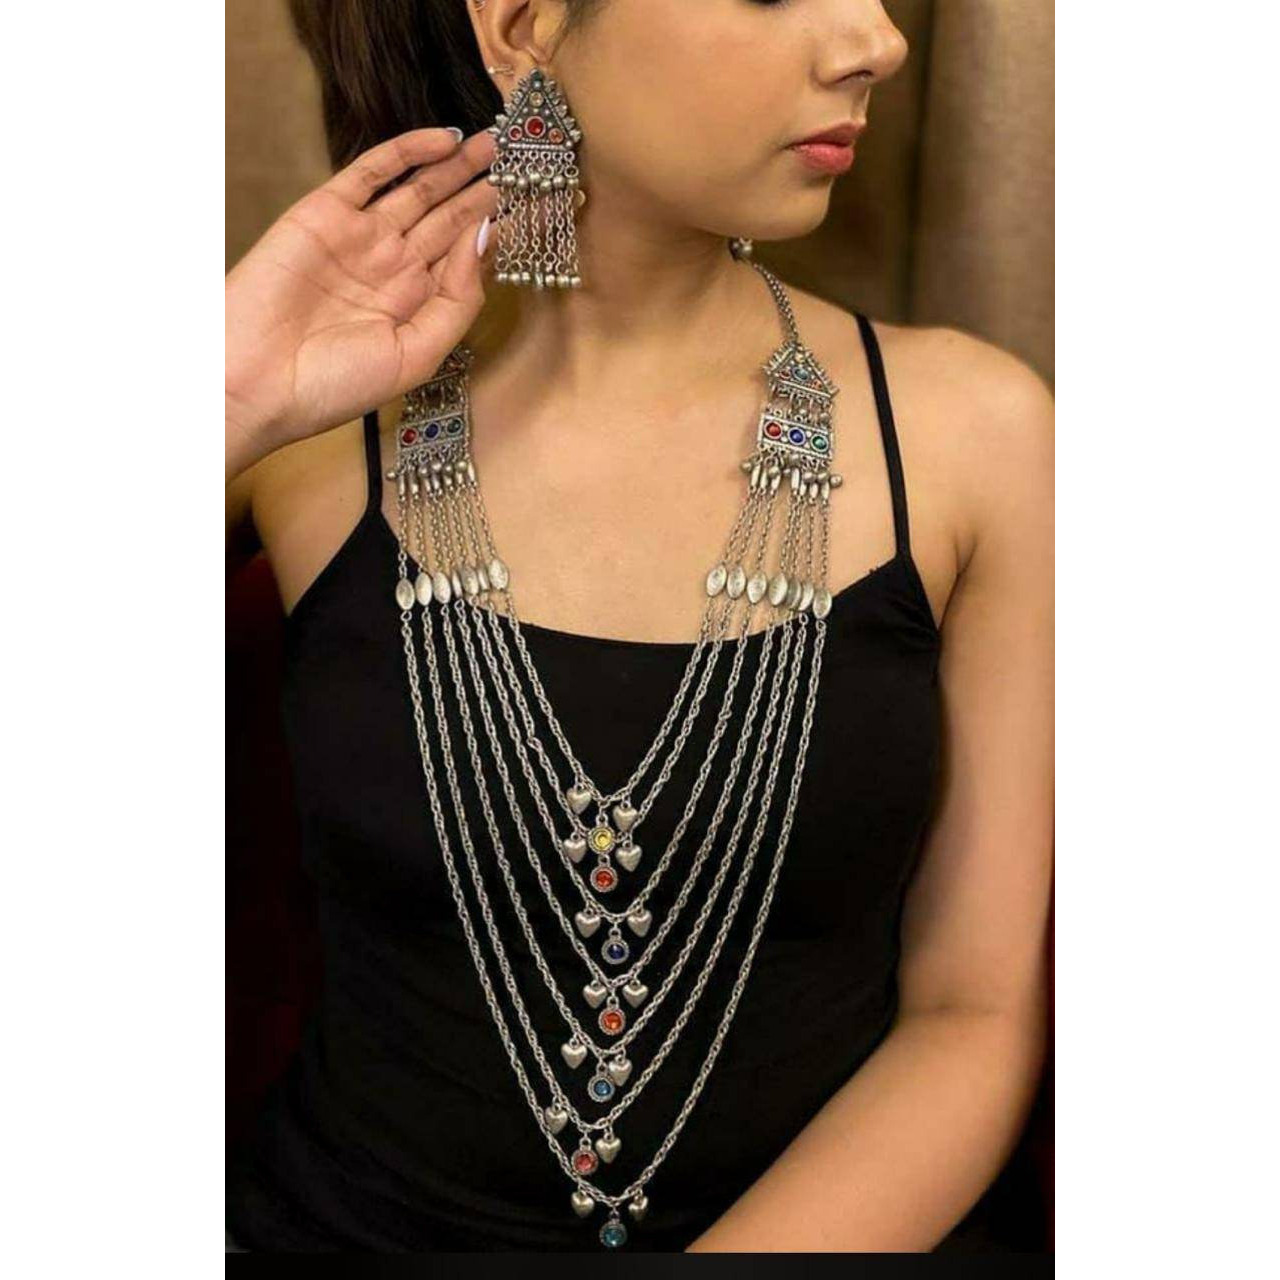 Multi strand jewellery set, multilayer necklace set, Boho jewellery, gifts for her, gypsy jewellery, silver oxidised set, handmade, hotselli